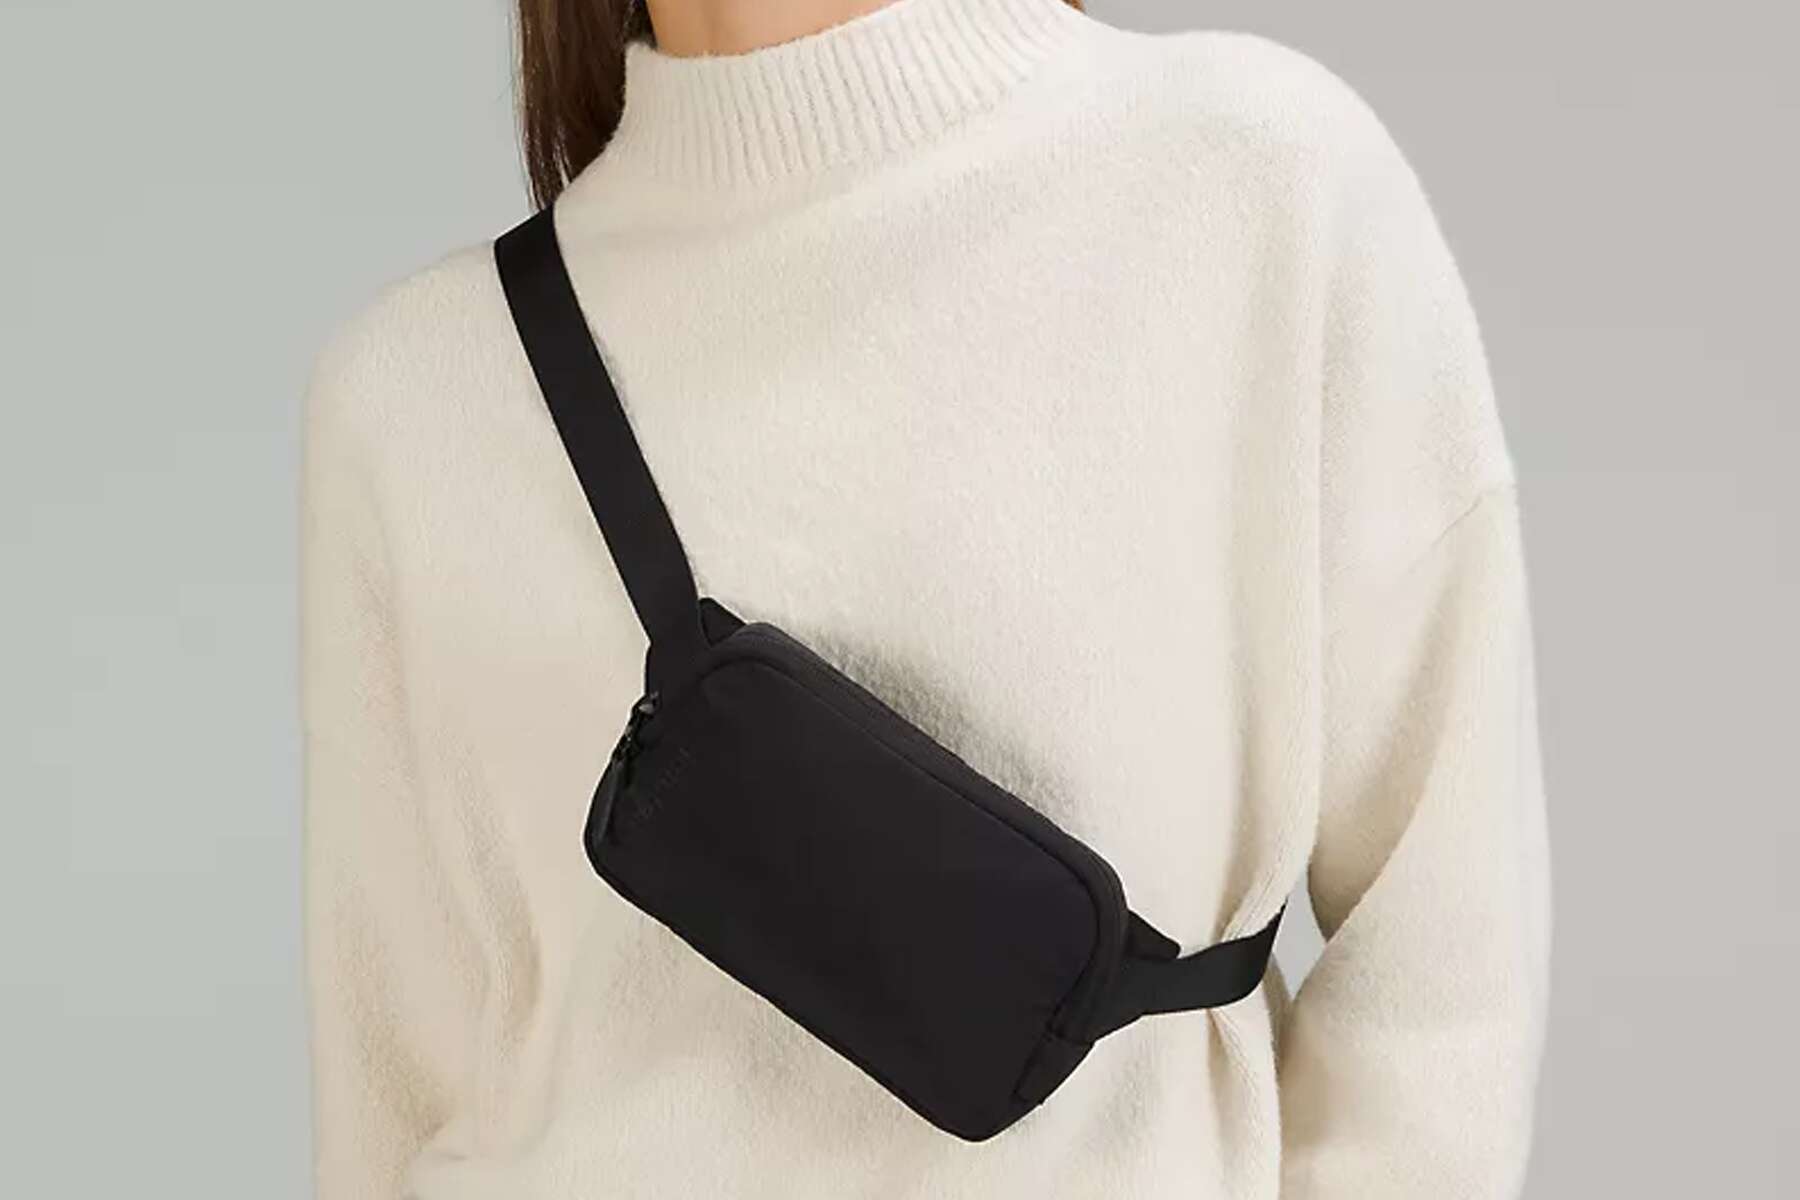 Lululemon Mini Belt Bag - Black/Neutral